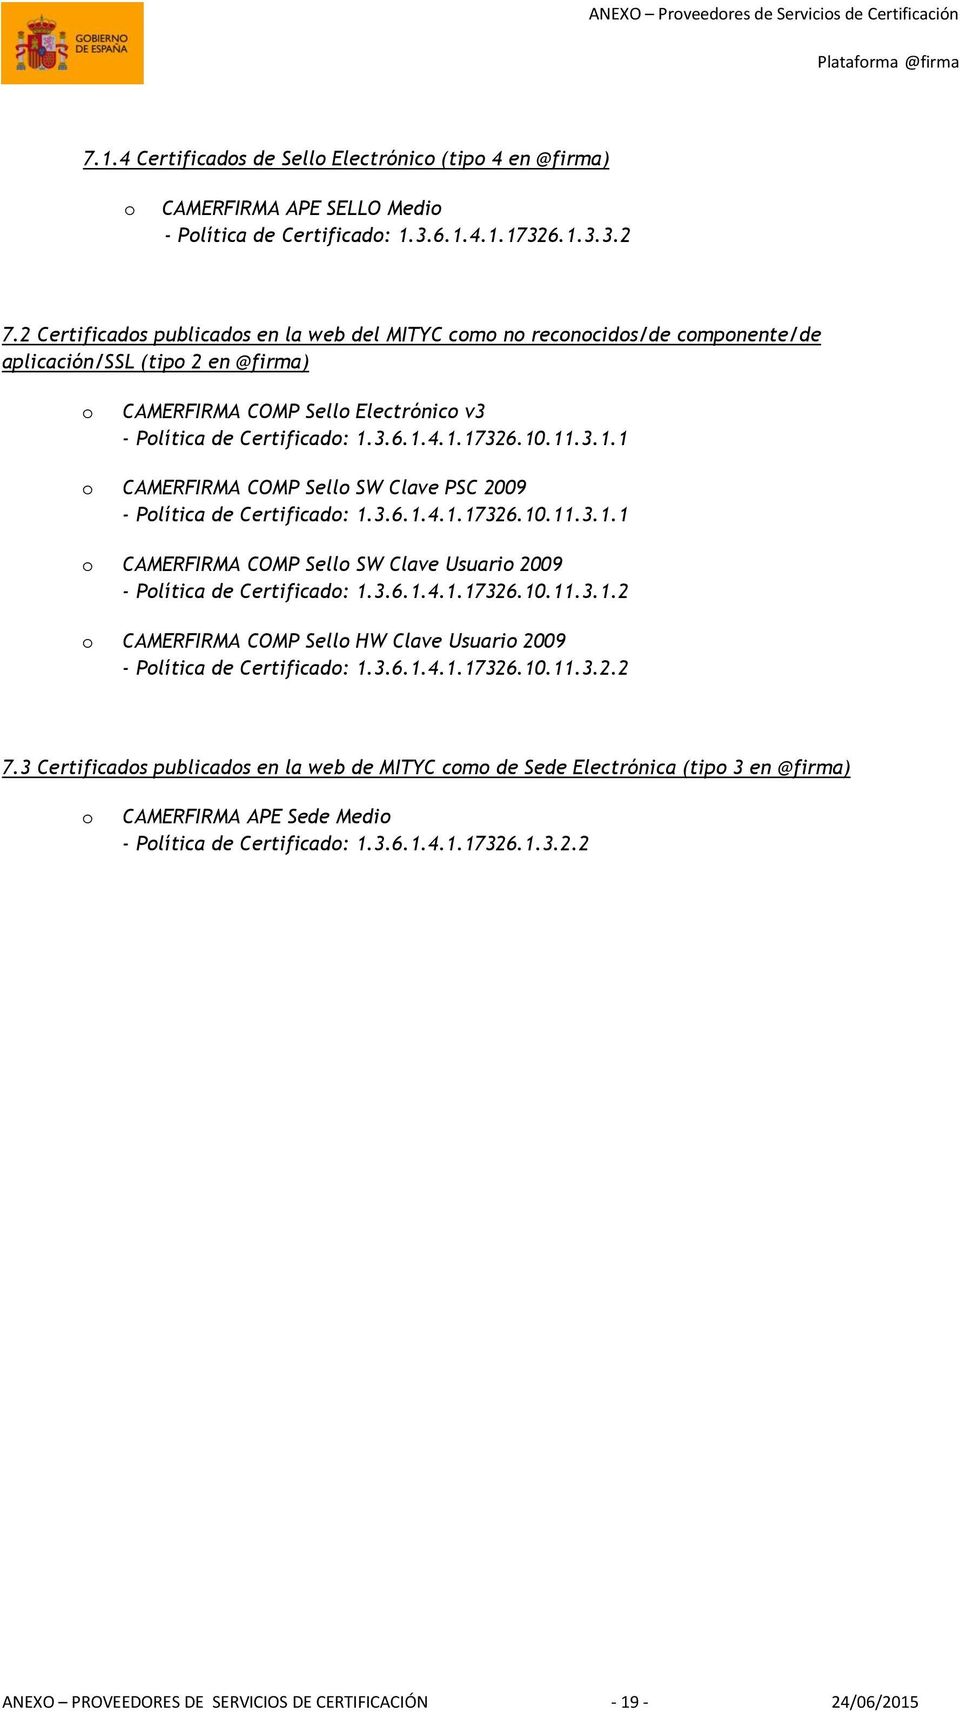 3.6.1.4.1.17326.10.11.3.1.1 CAMERFIRMA COMP Sell SW Clave PSC 2009 - Plítica de Certificad: 1.3.6.1.4.1.17326.10.11.3.1.1 CAMERFIRMA COMP Sell SW Clave Usuari 2009 - Plítica de Certificad: 1.3.6.1.4.1.17326.10.11.3.1.2 CAMERFIRMA COMP Sell HW Clave Usuari 2009 - Plítica de Certificad: 1.